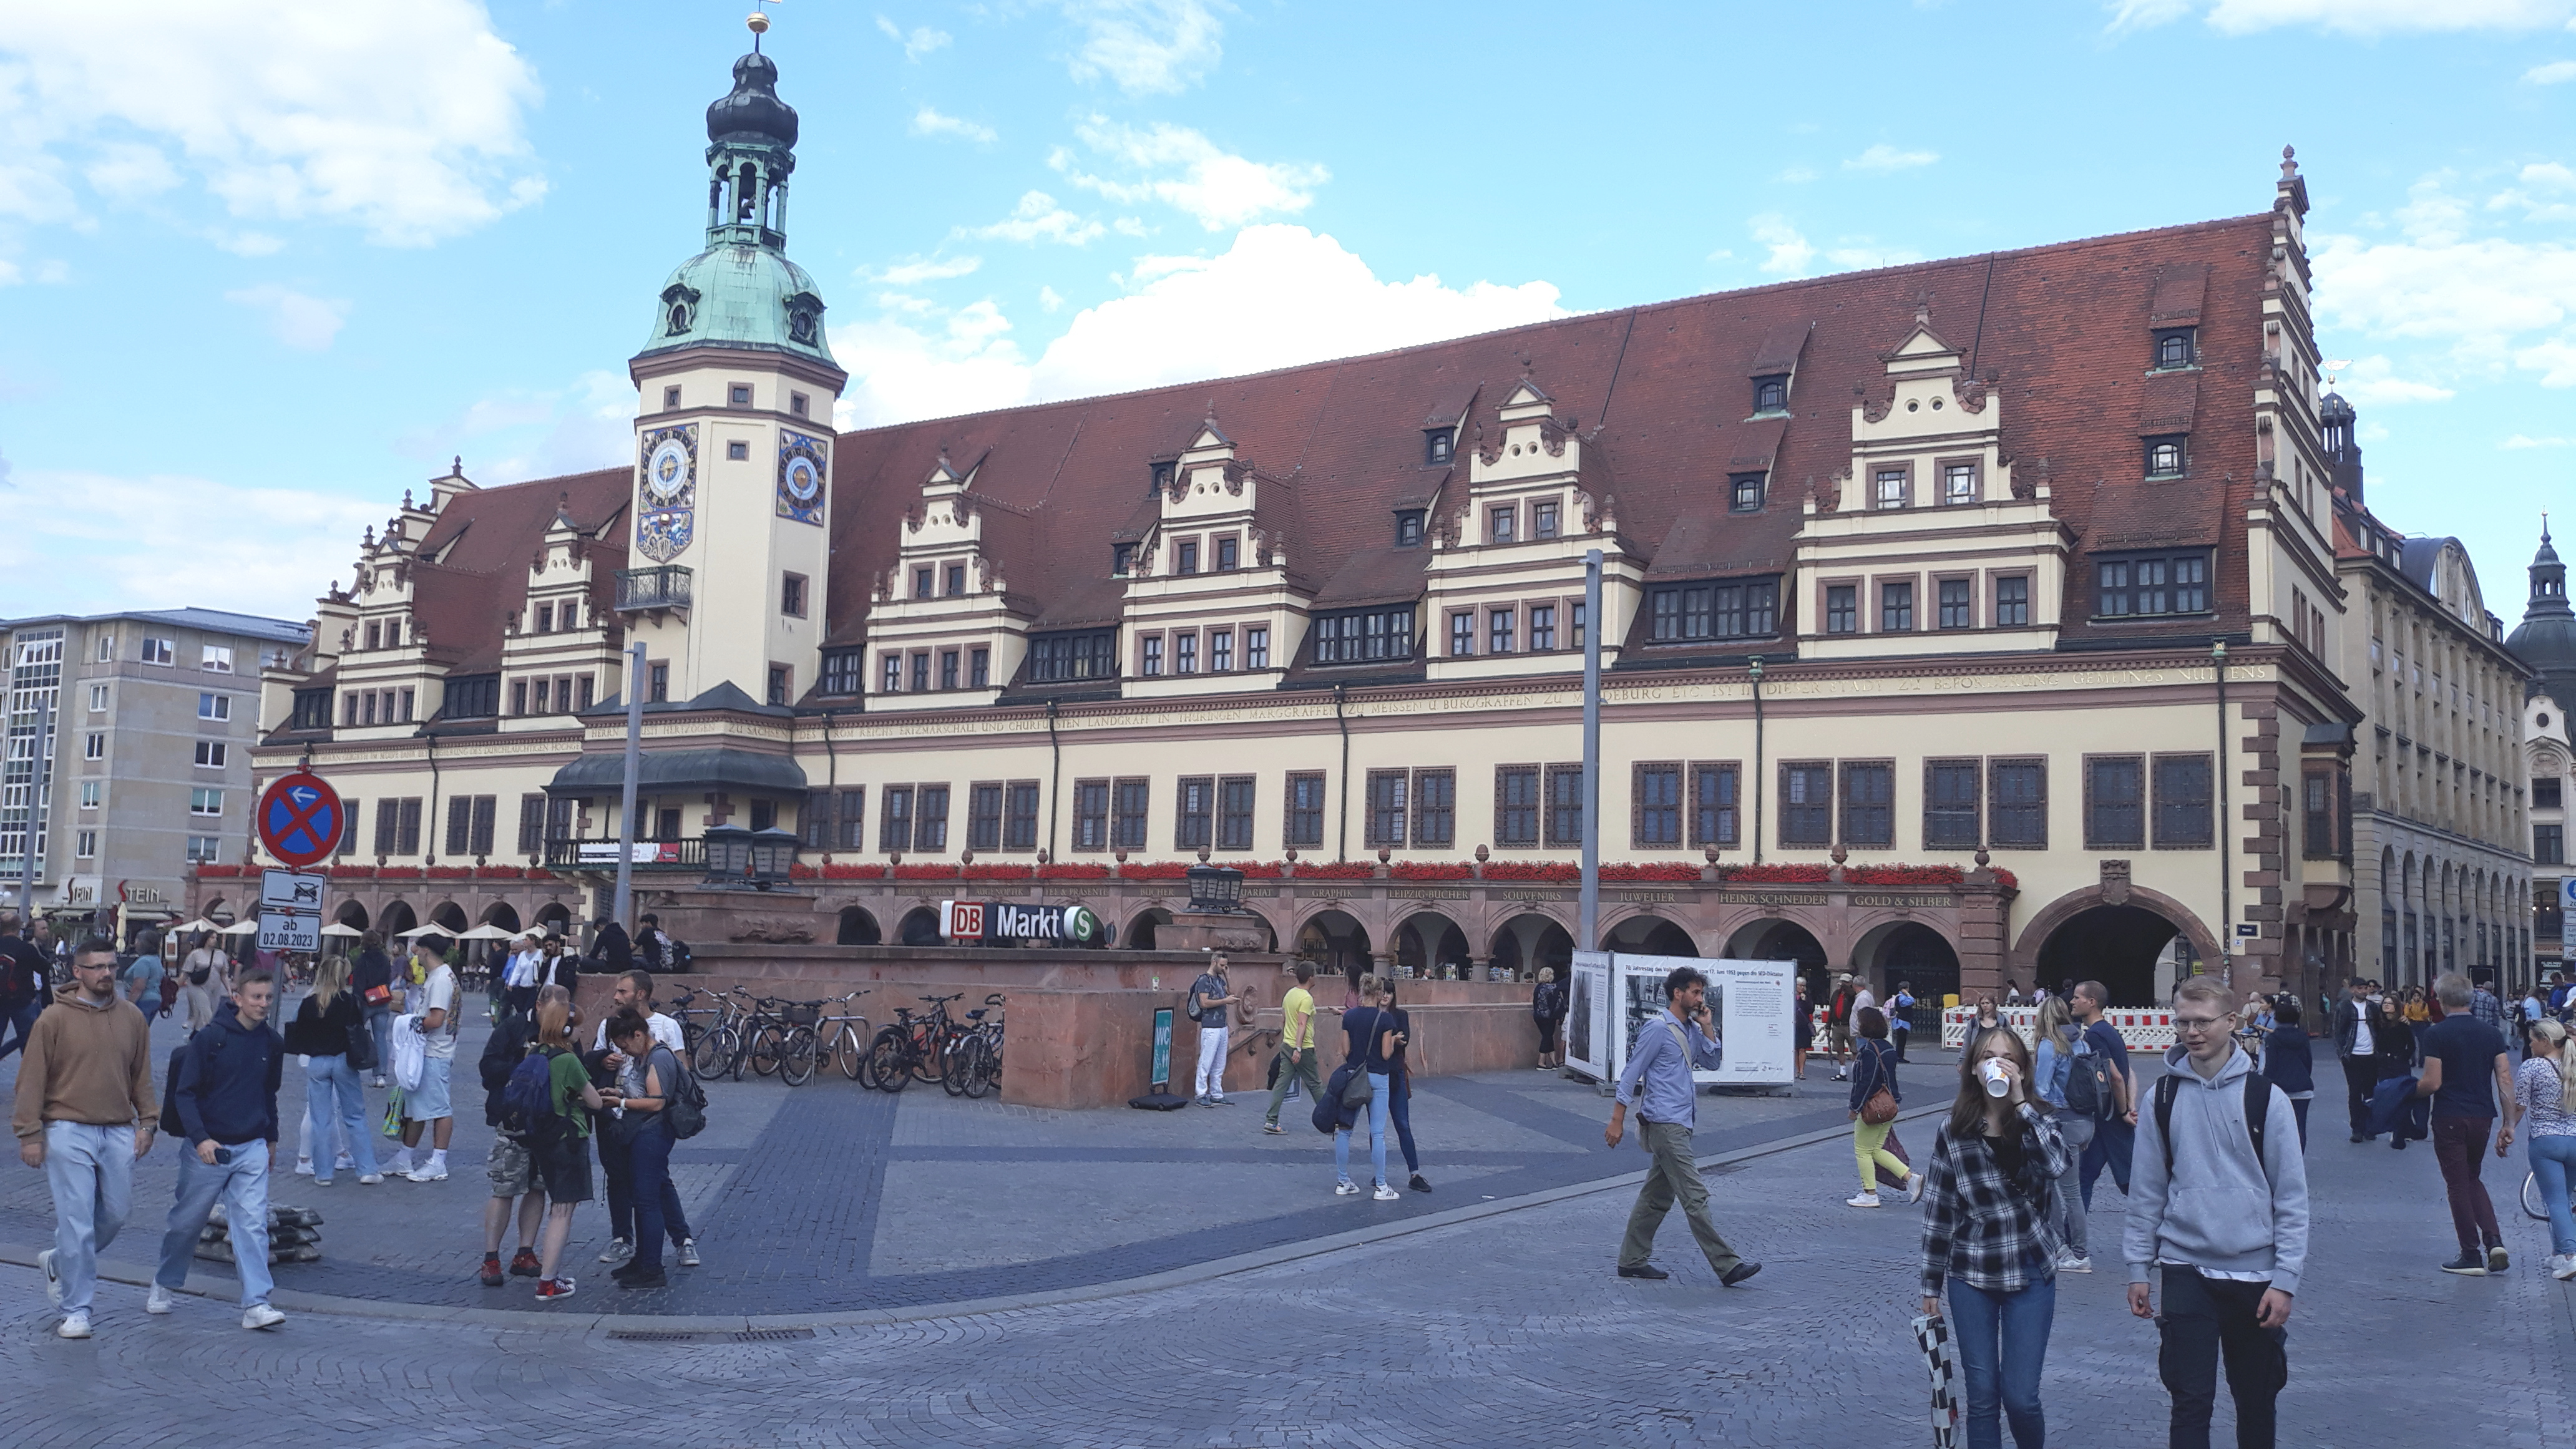 Leipzig Rathaus (town hall)